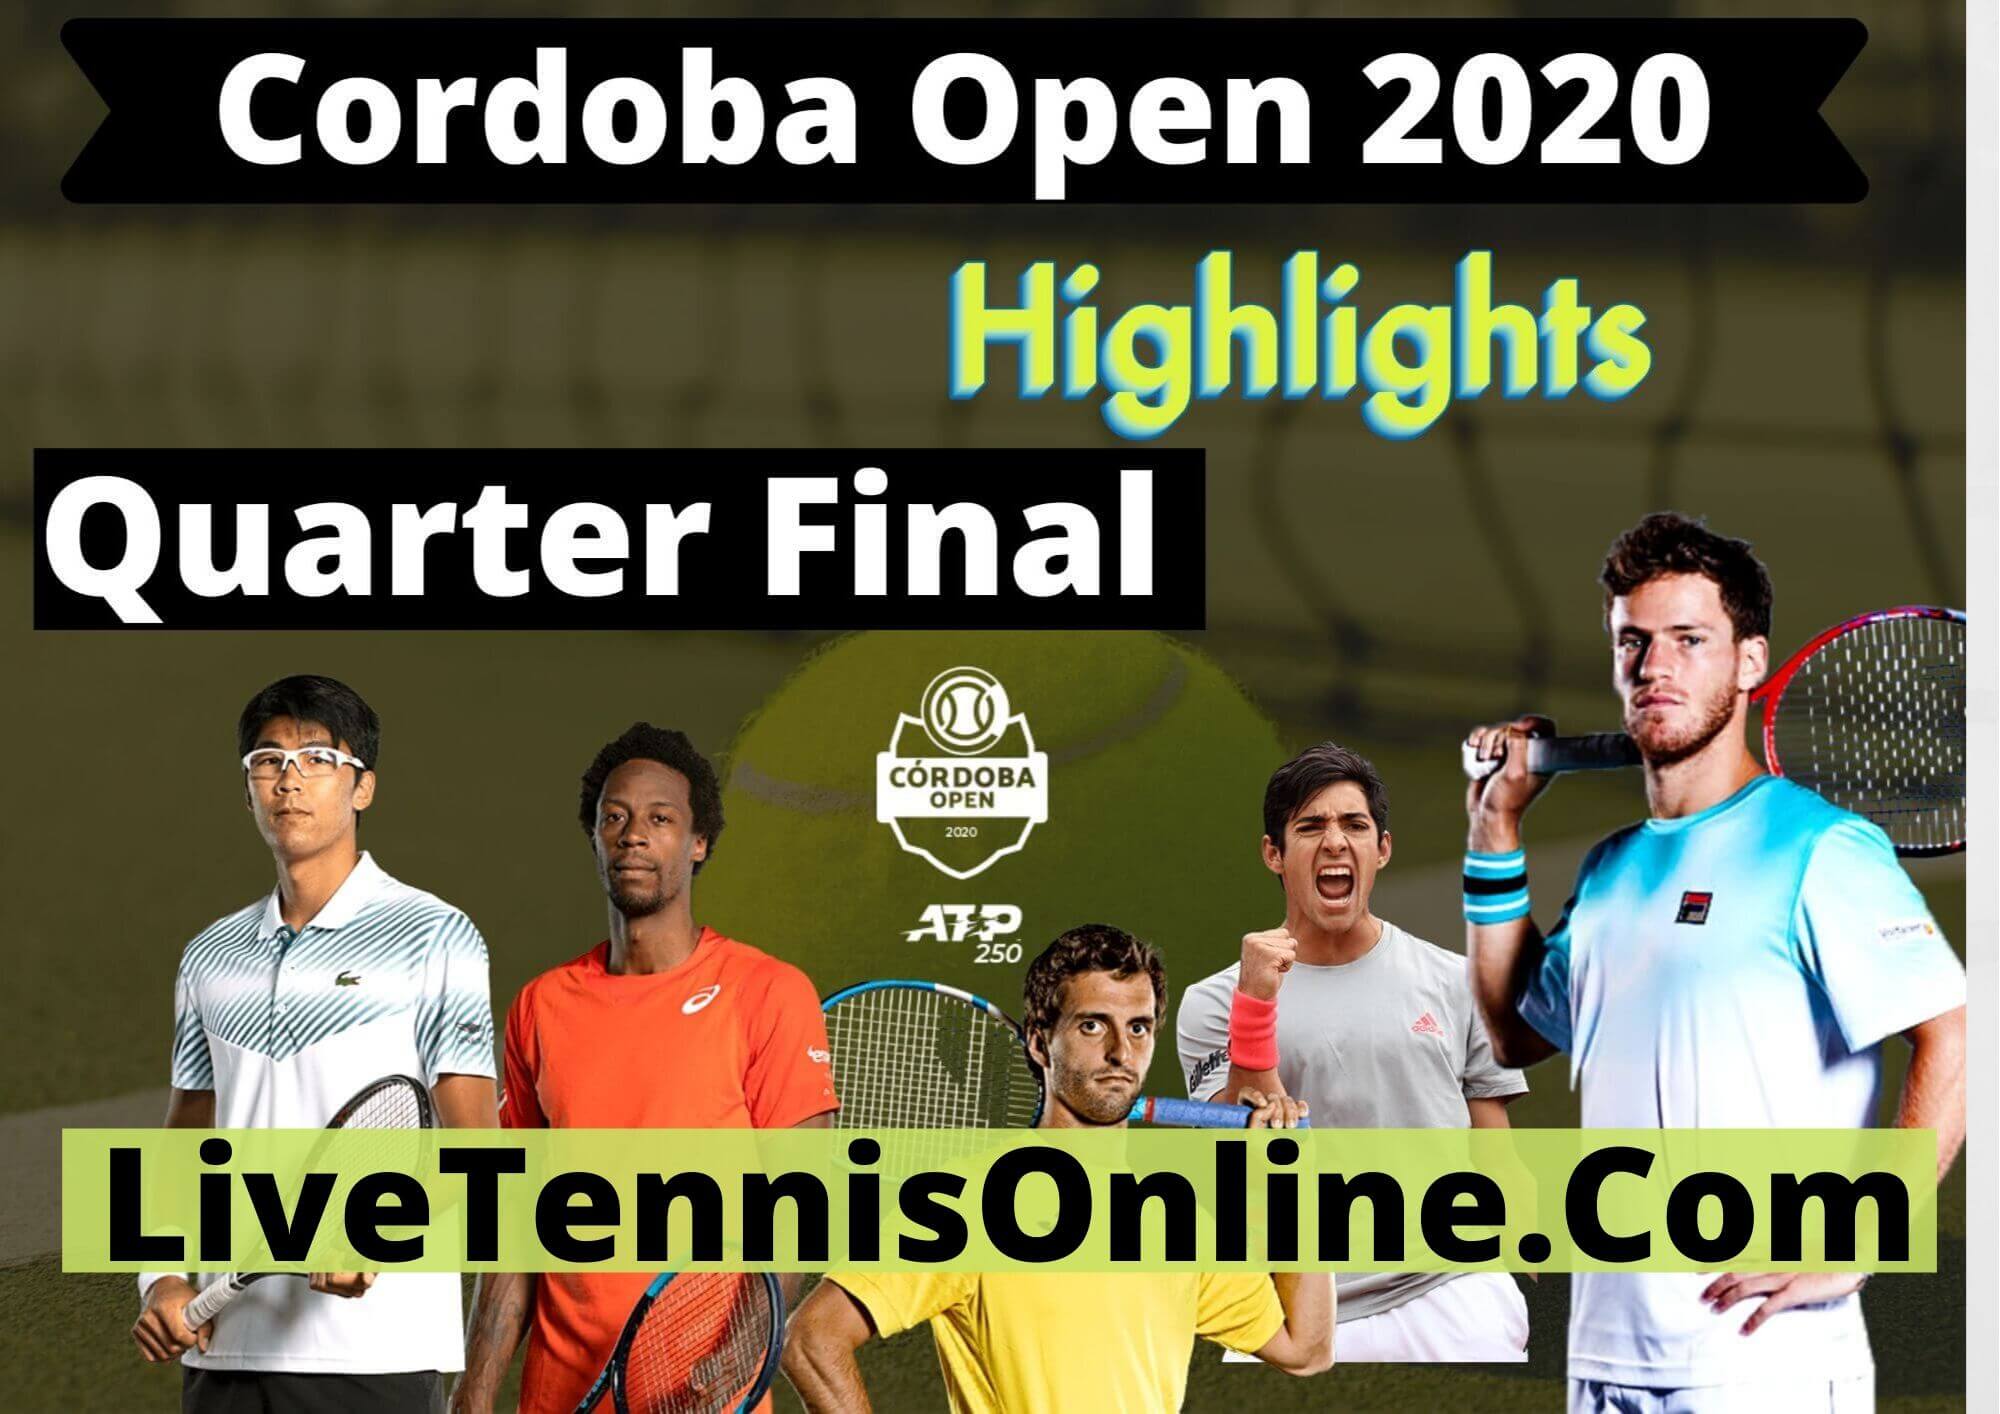 A Martin Vs C Moutet Quarter Final Highlights Cordoba Open 2020